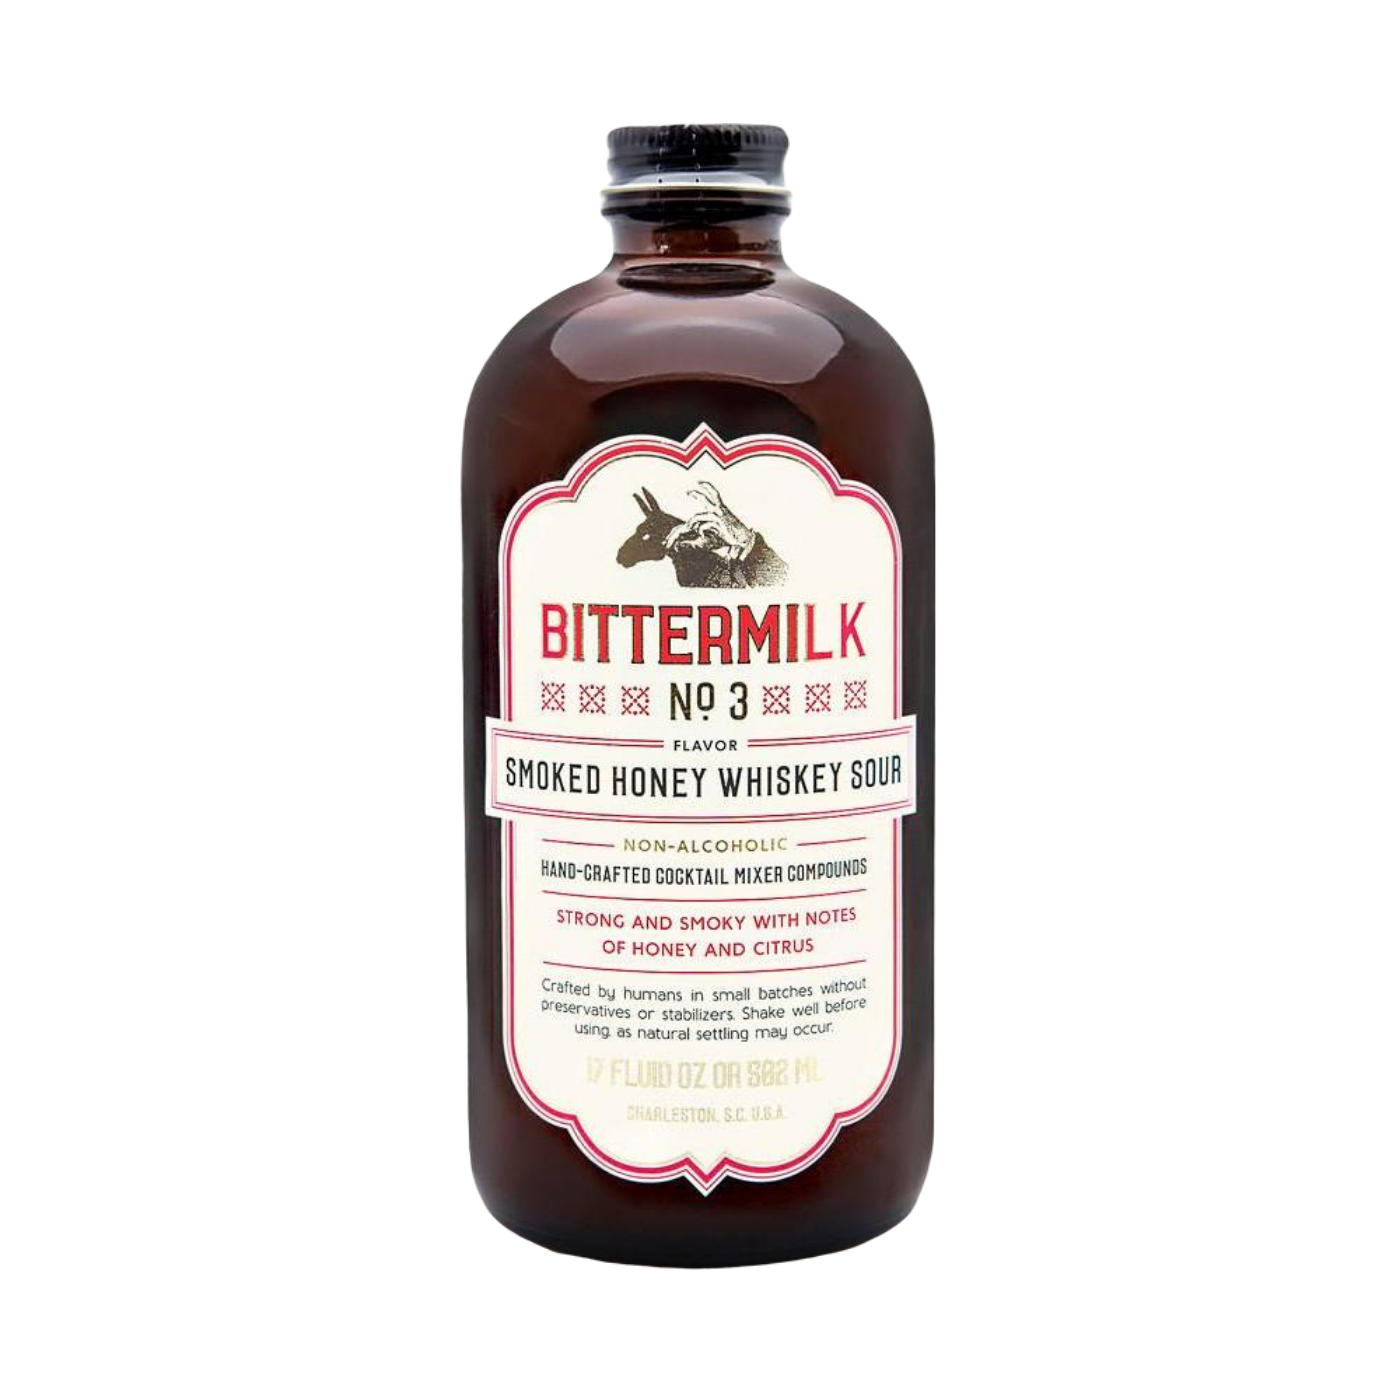 Bittermilk - Smoked Honey Whiskey Sour